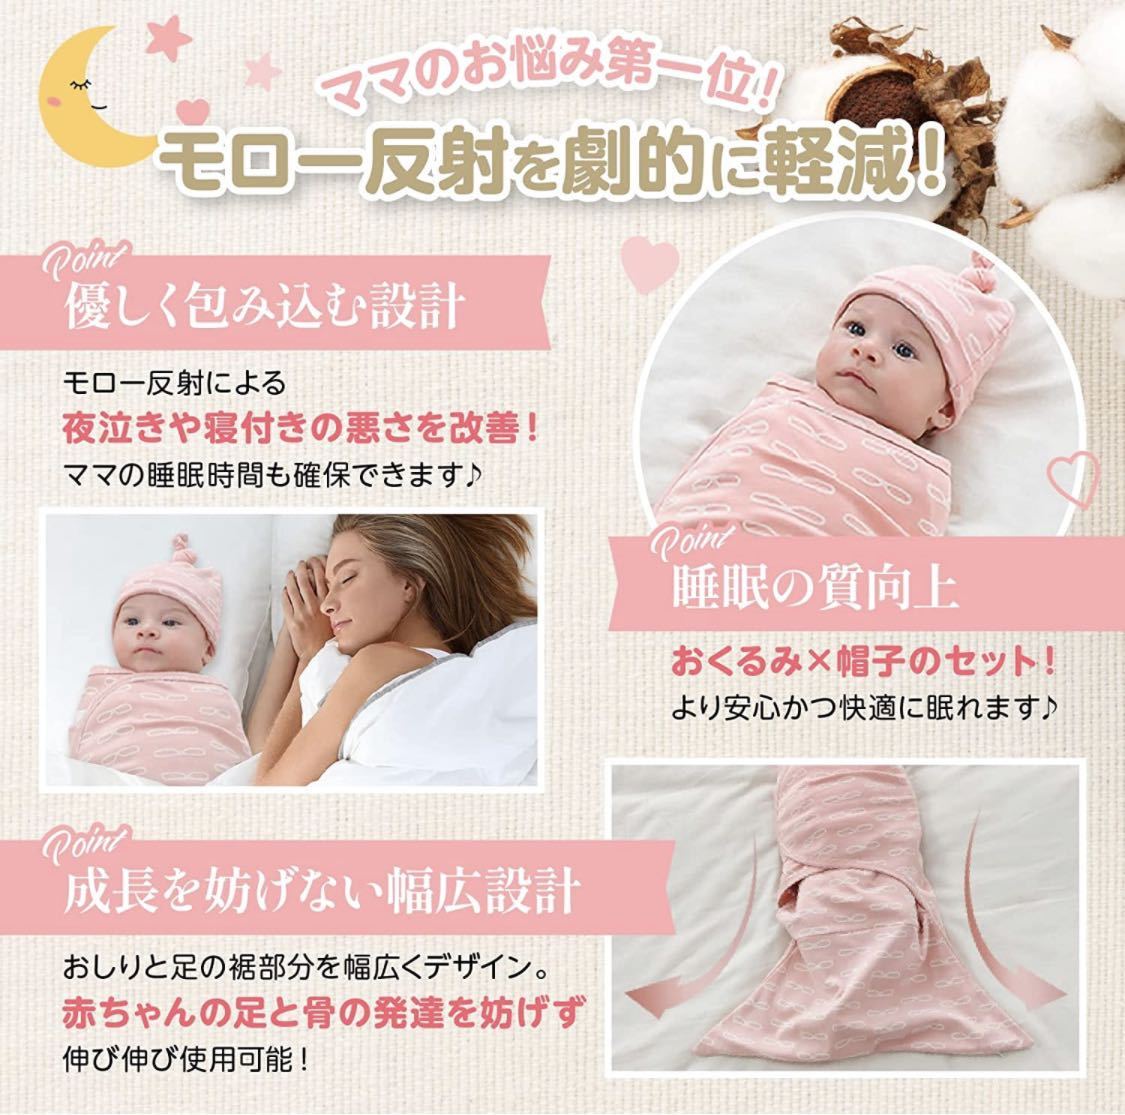  blanket mo low reflection swa dollar newborn baby night crying . measures sleeping bag natural cotton 100% hat attaching dinosaur 